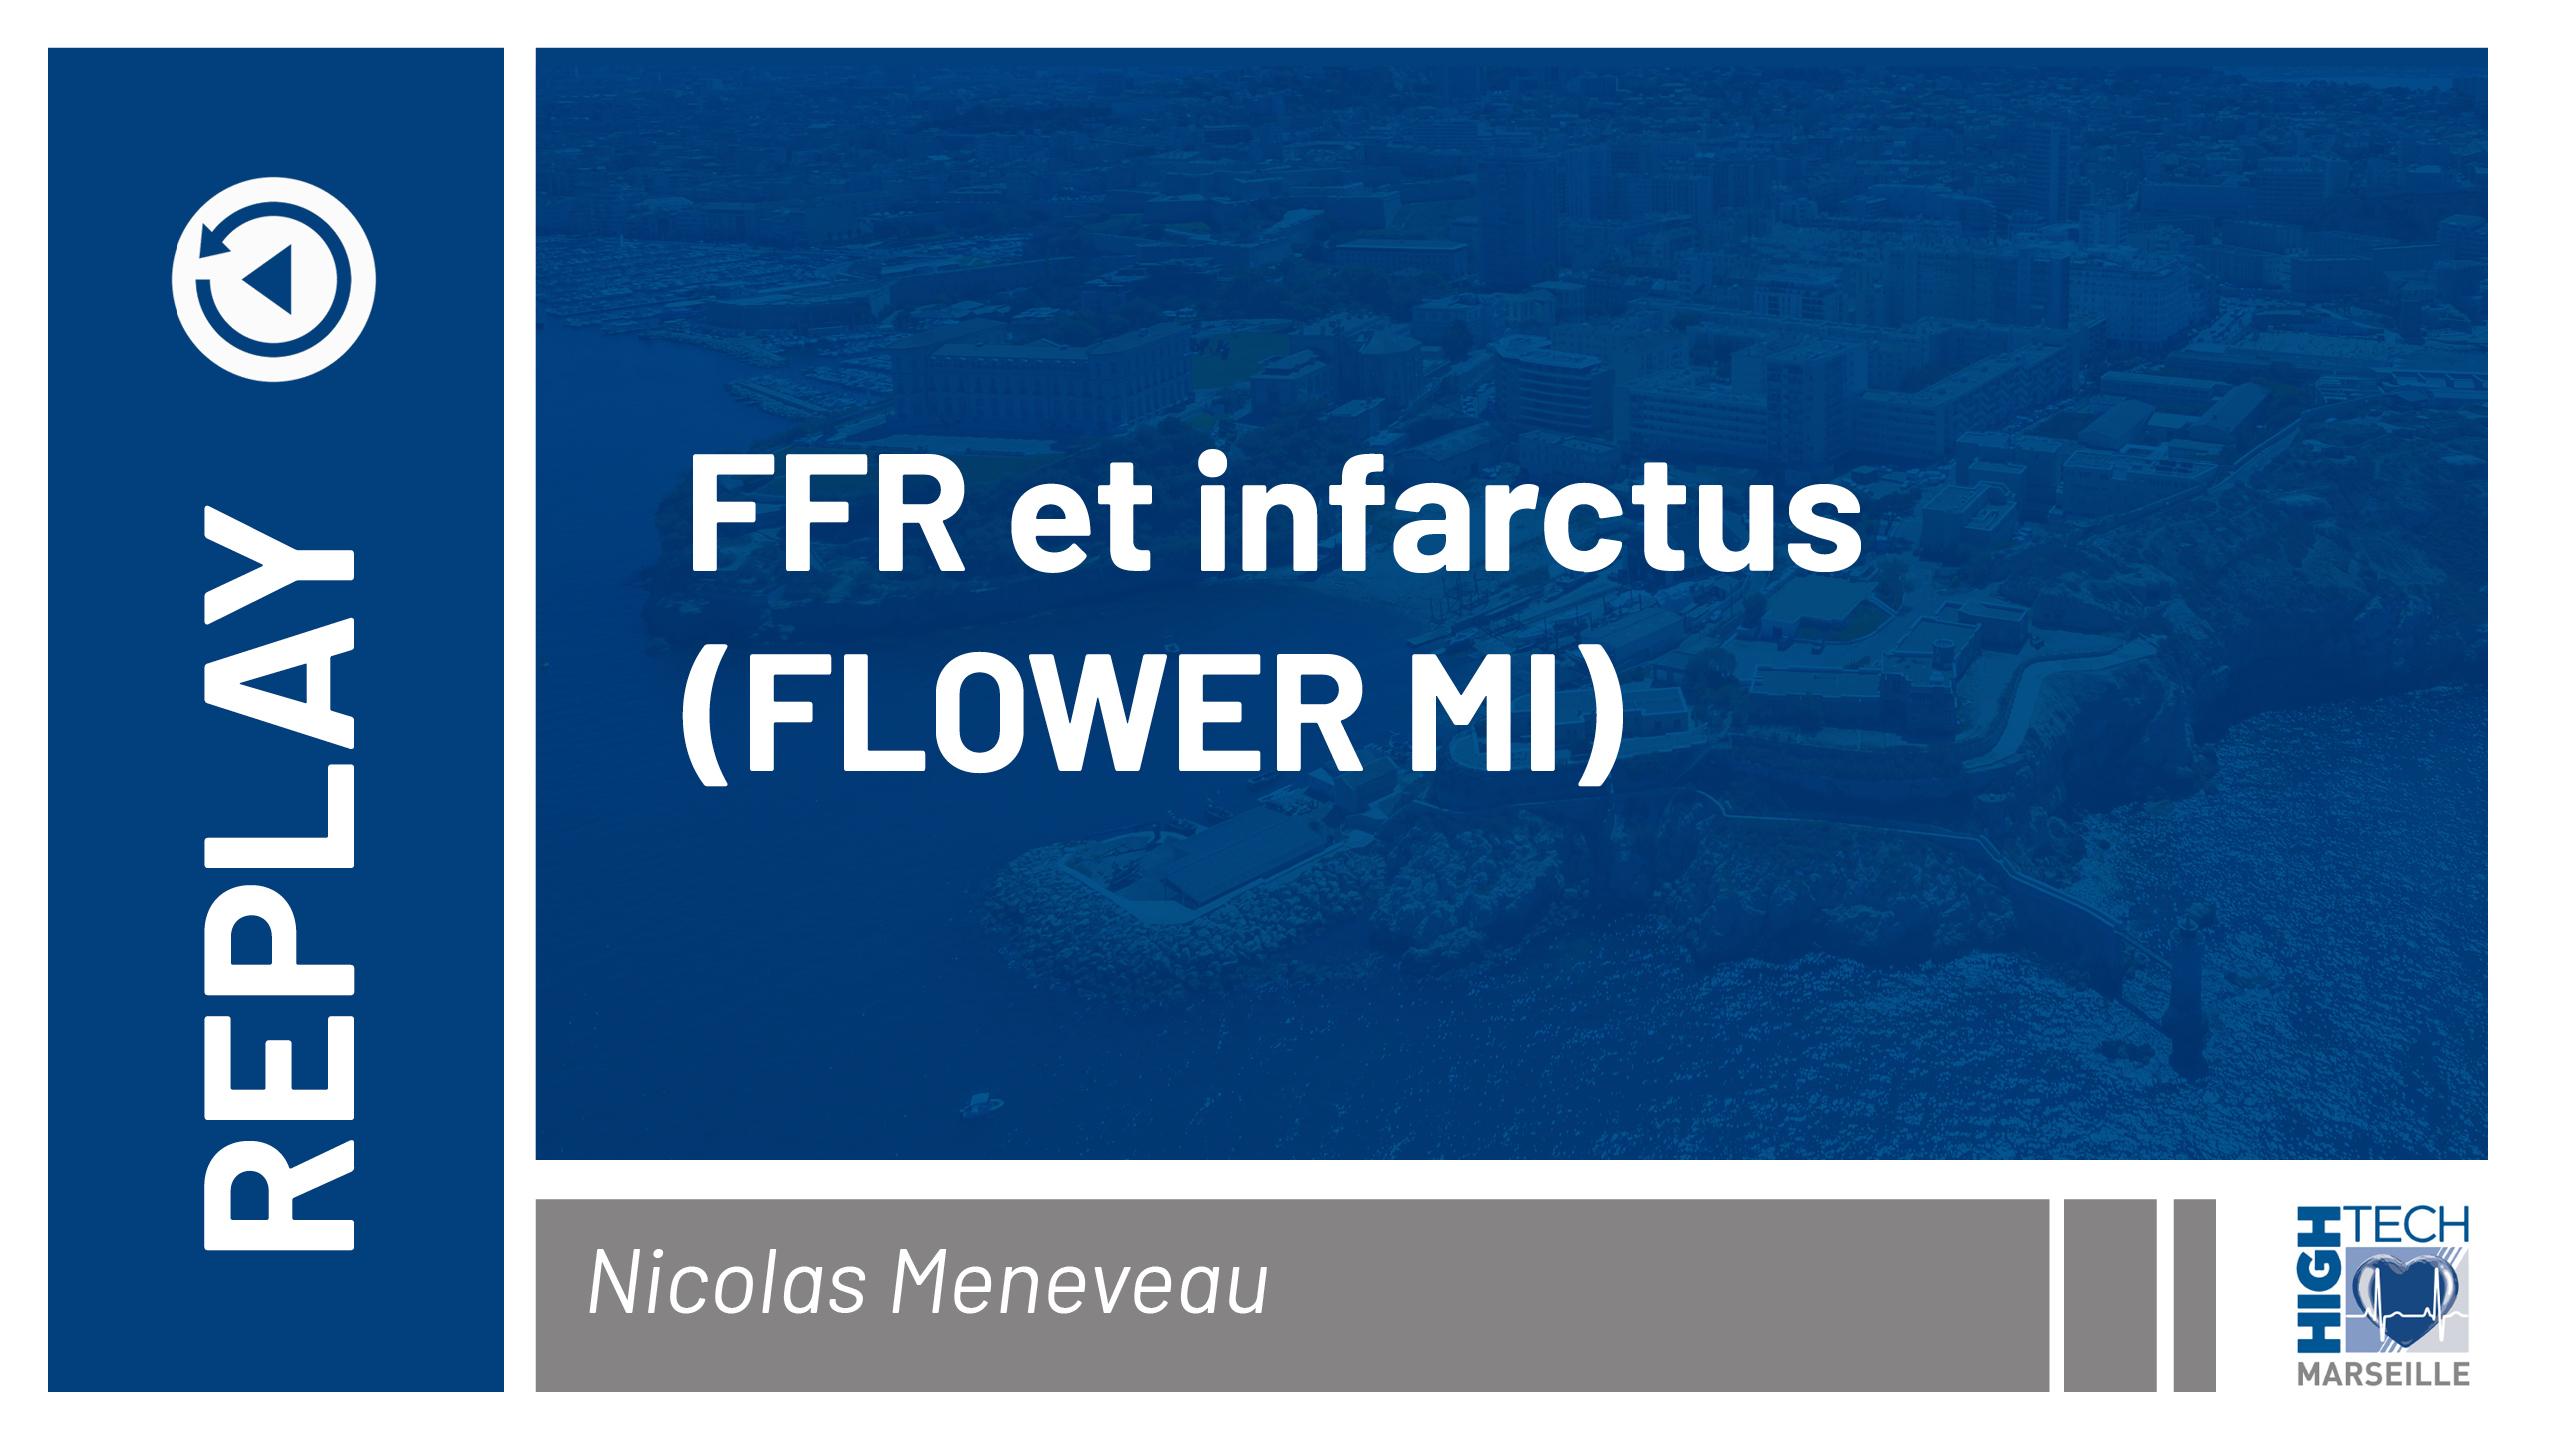 FFR et infarctus – Nicolas Meneveau